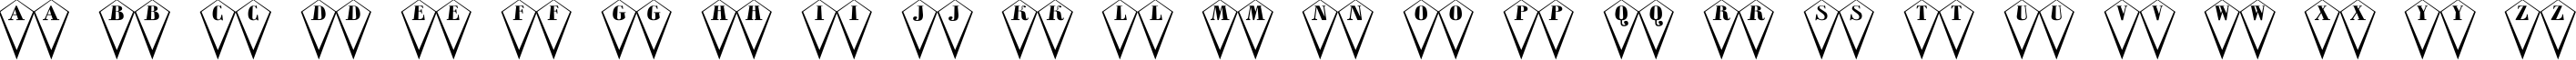 Пример написания английского алфавита шрифтом a_RombyOtlDn3D